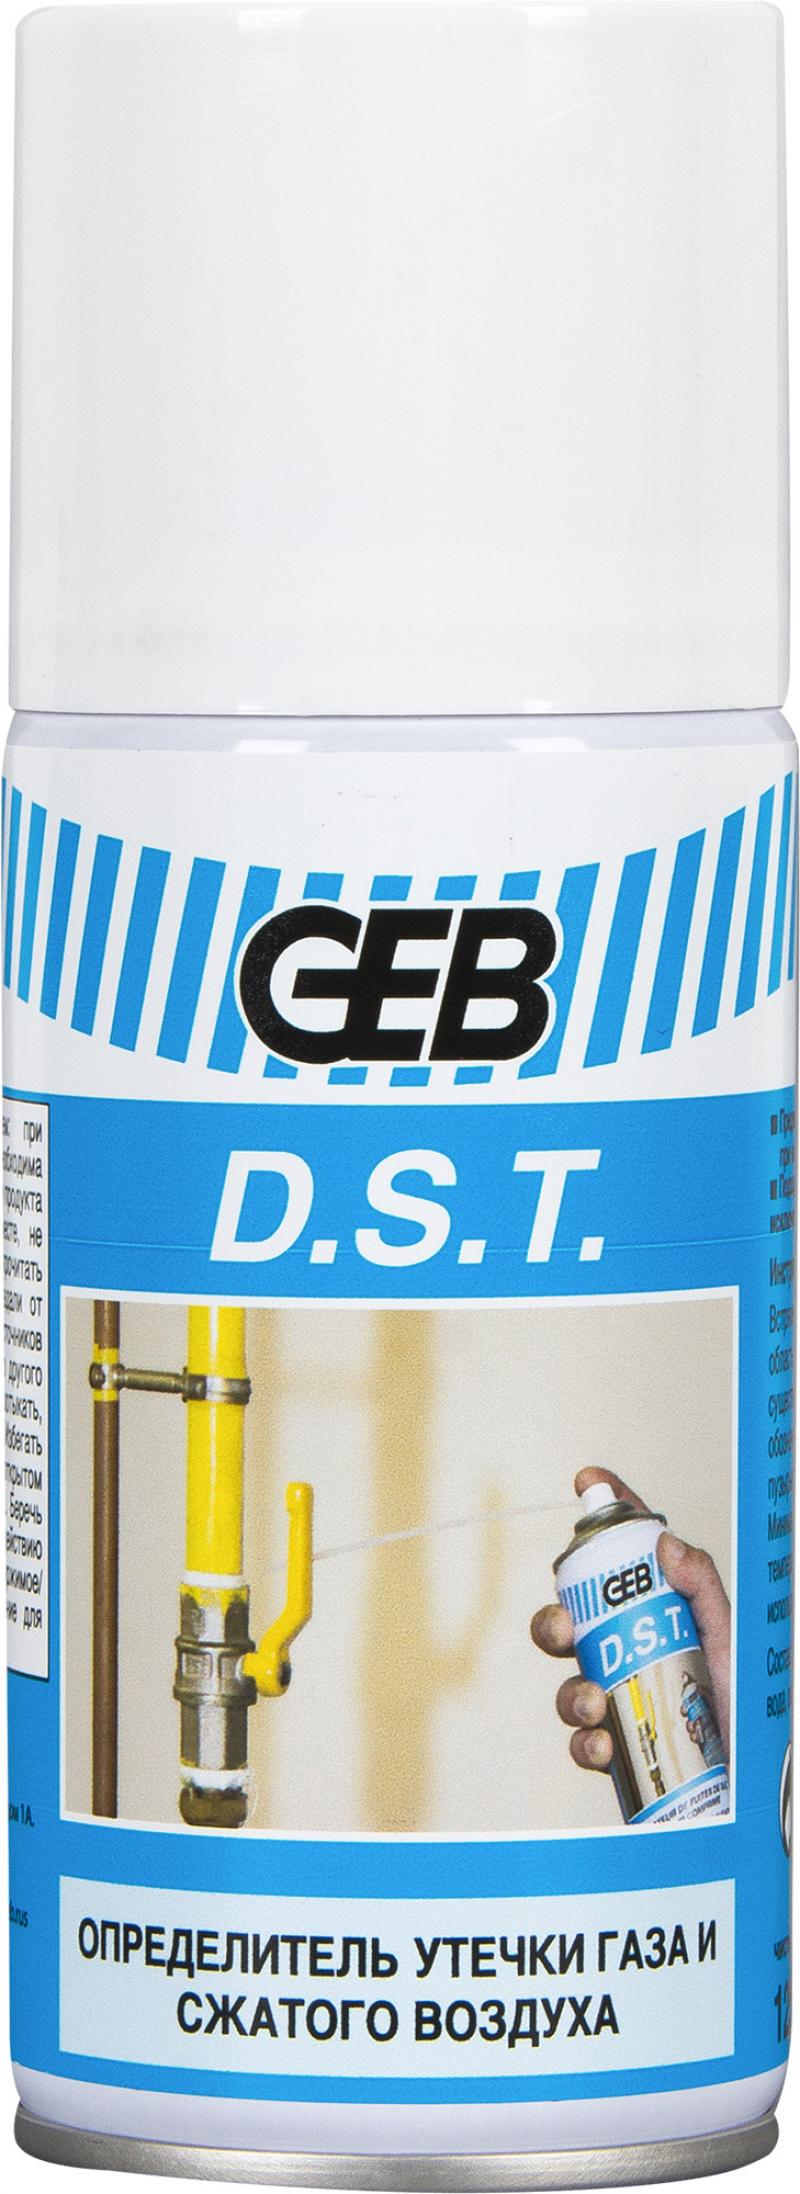 Детектор утечки газа GEB DST, 210 мл